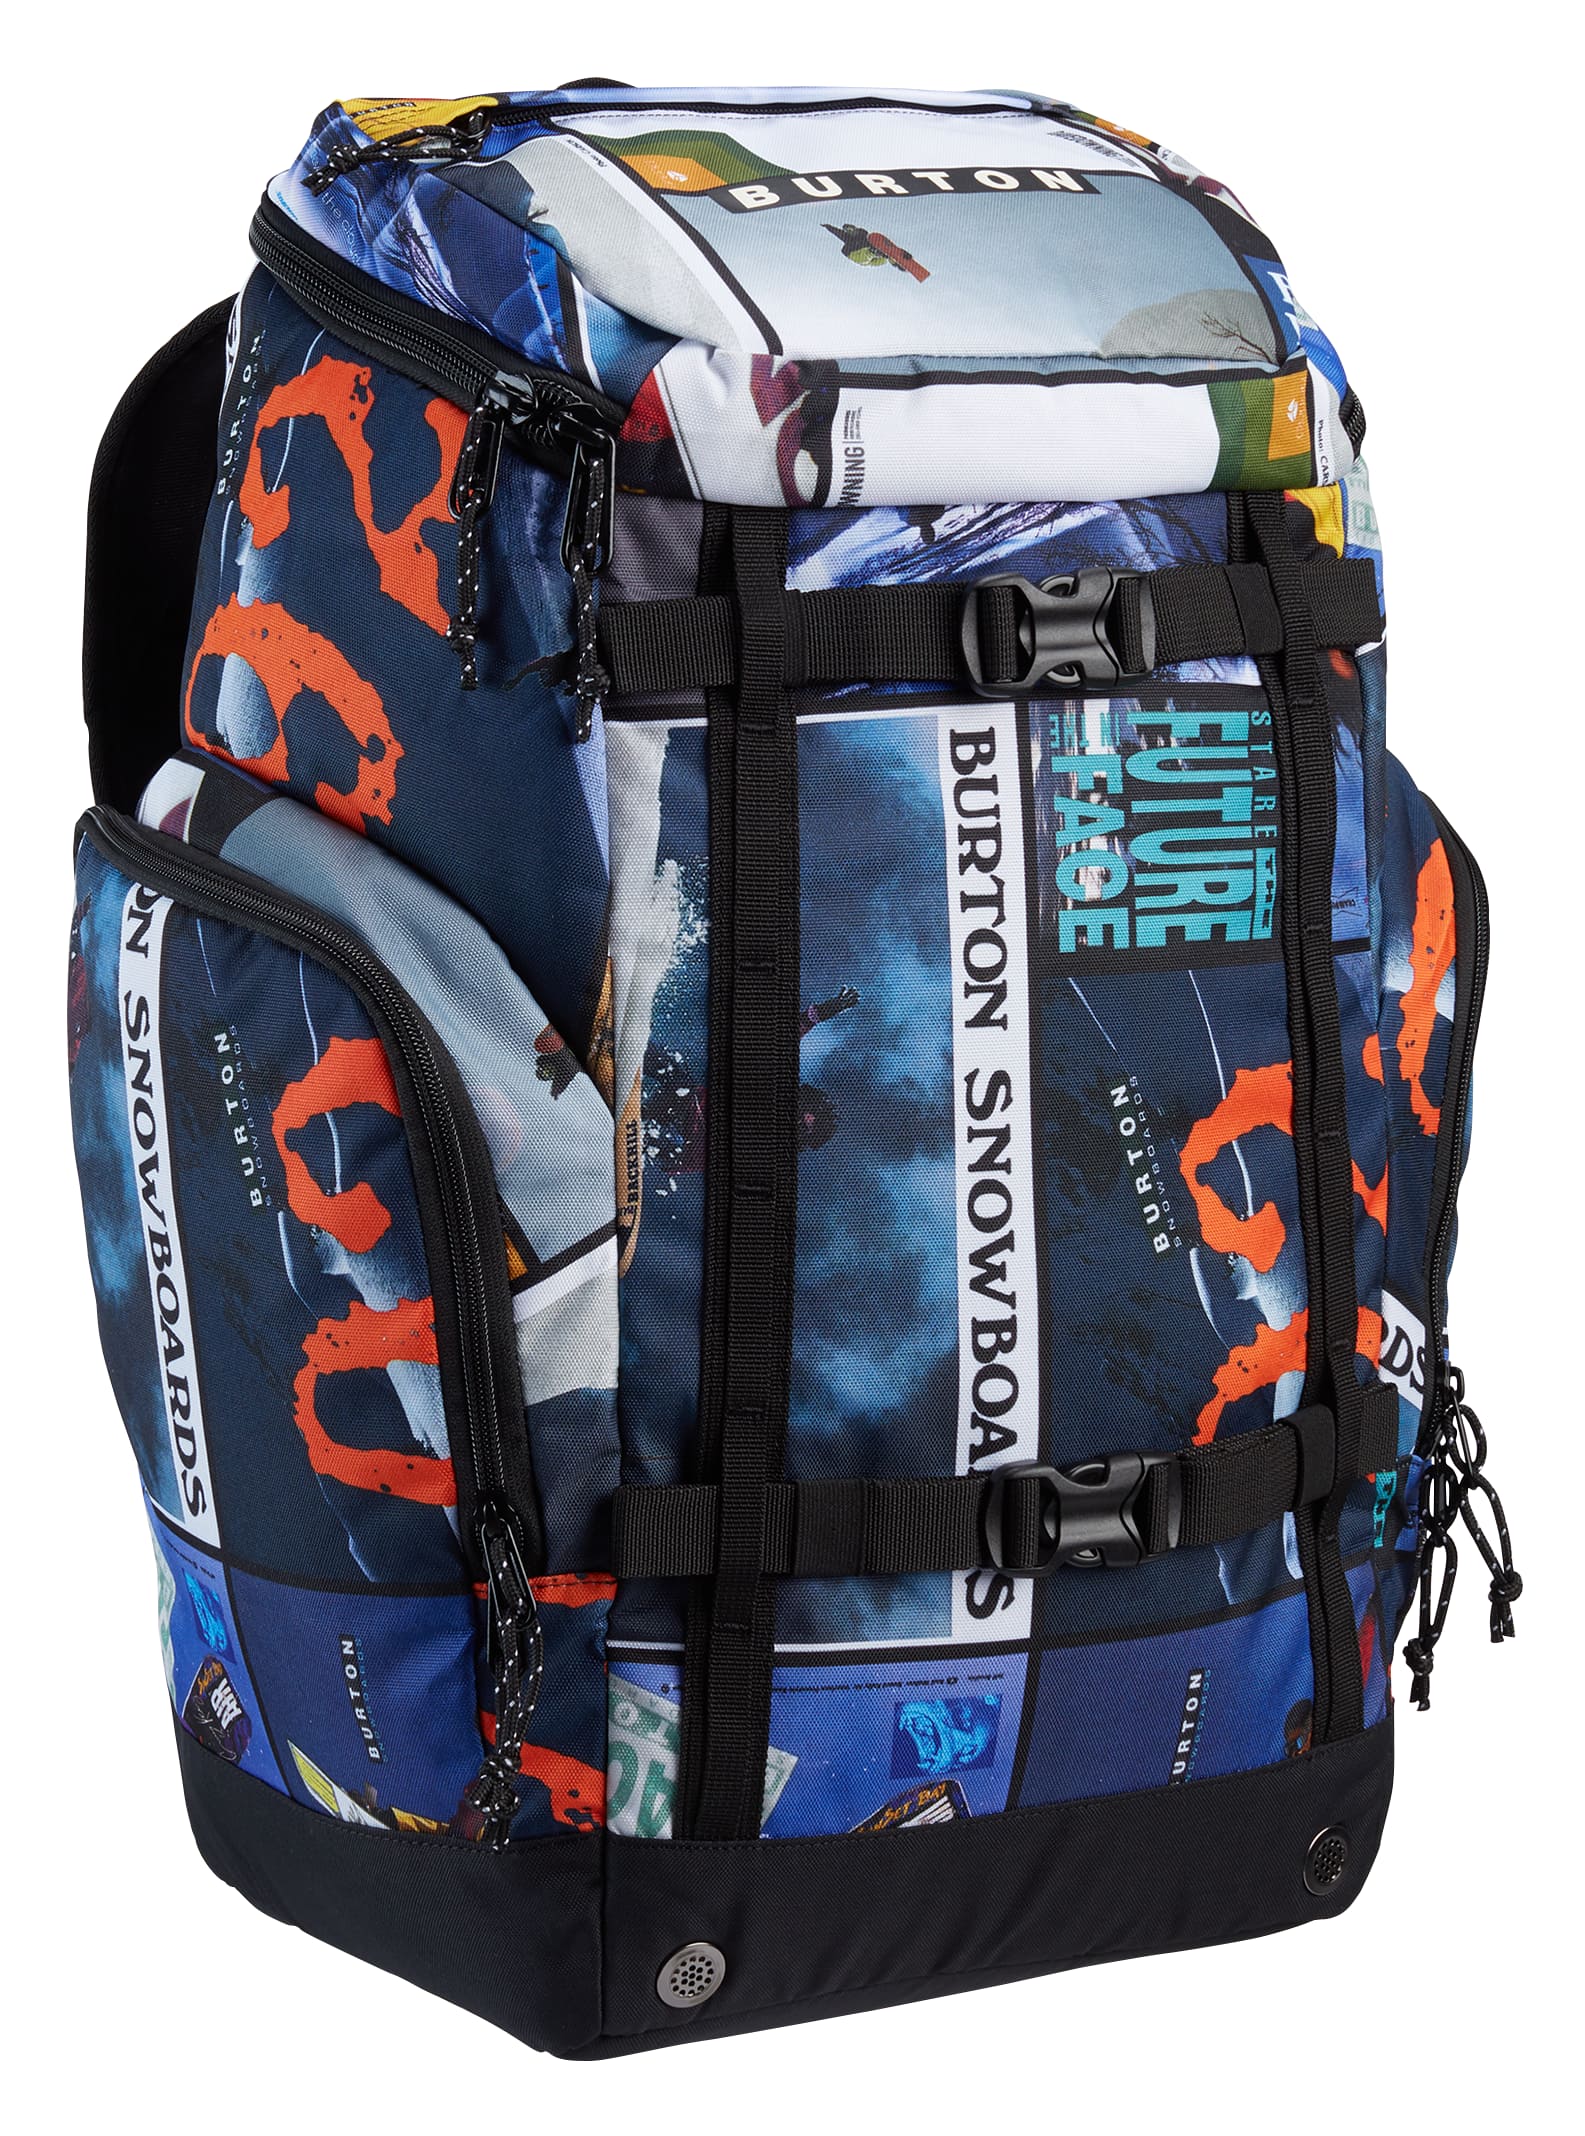 DYNWAVE Snowboarding Ski Bag Carry Case Snowboard Cover 